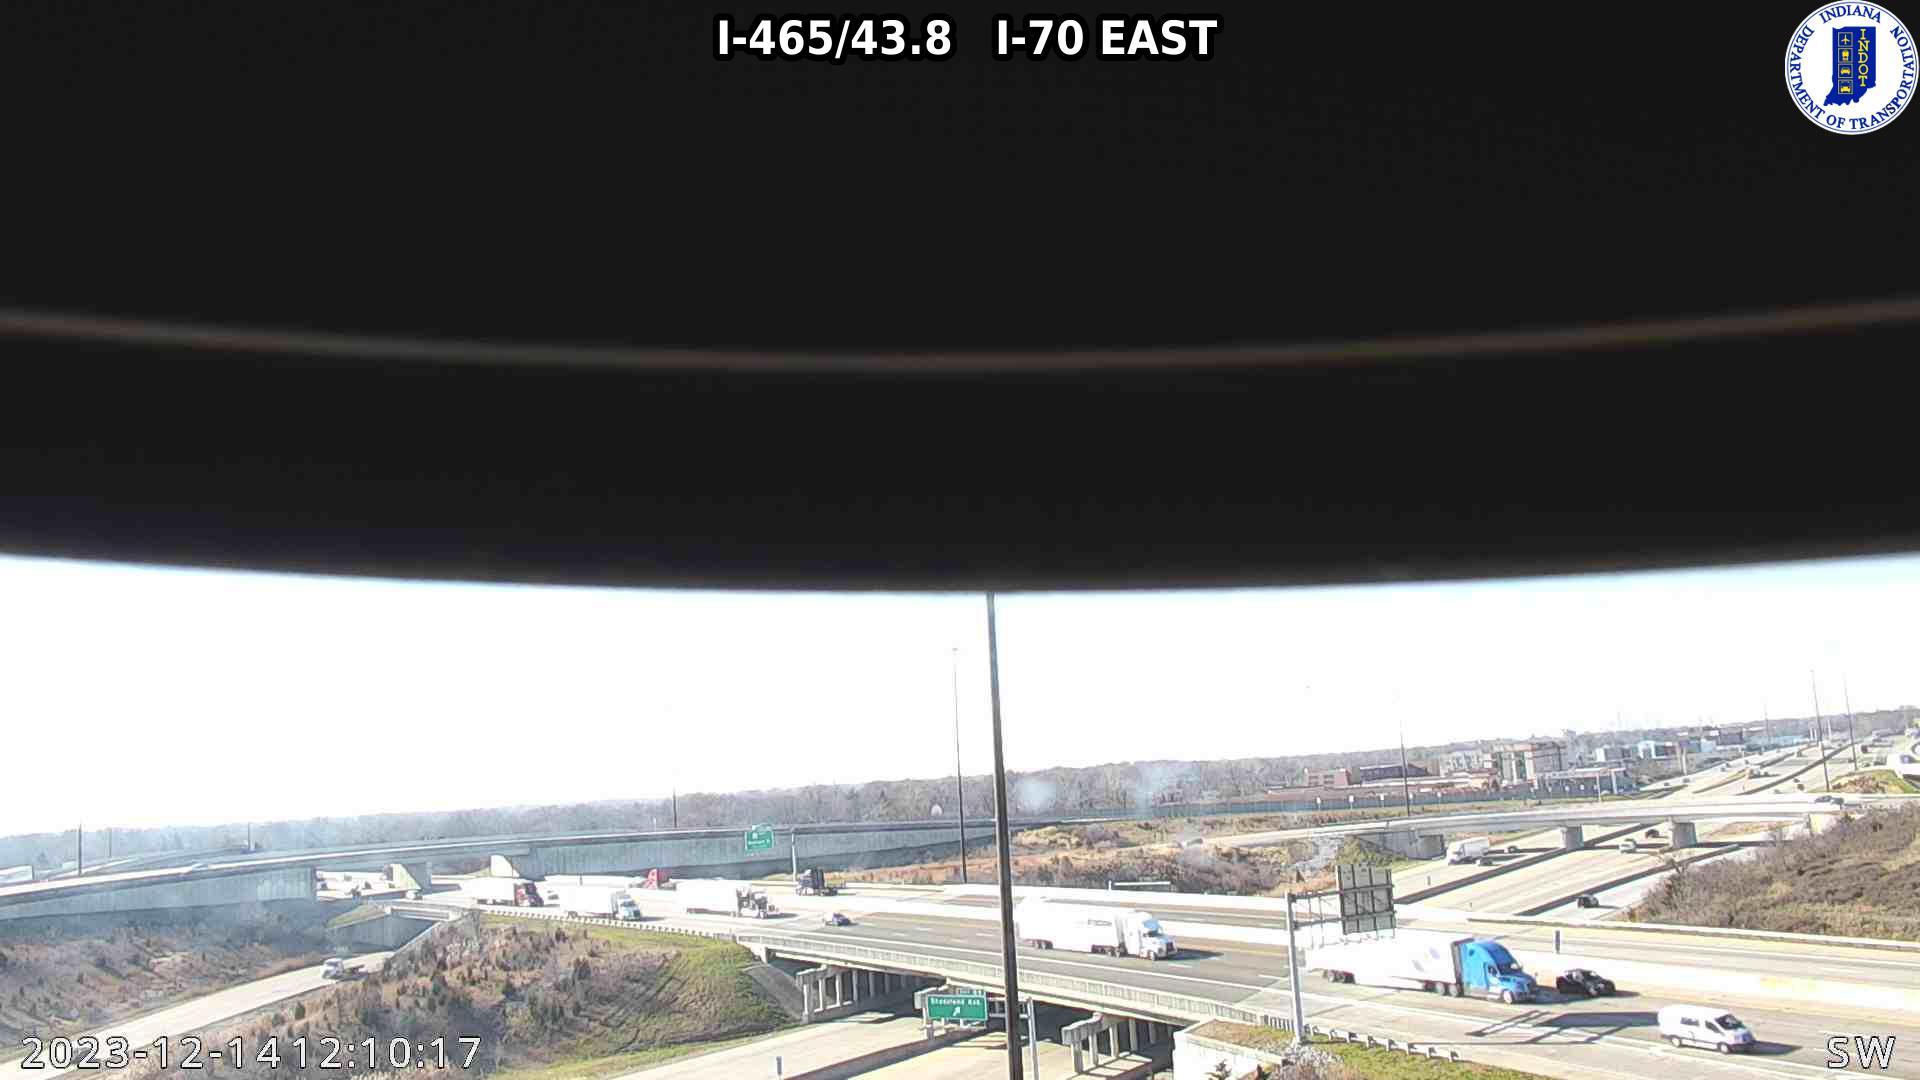 Traffic Cam Indianapolis › East: I-465: I-465/43.8 I-70 EAST Player